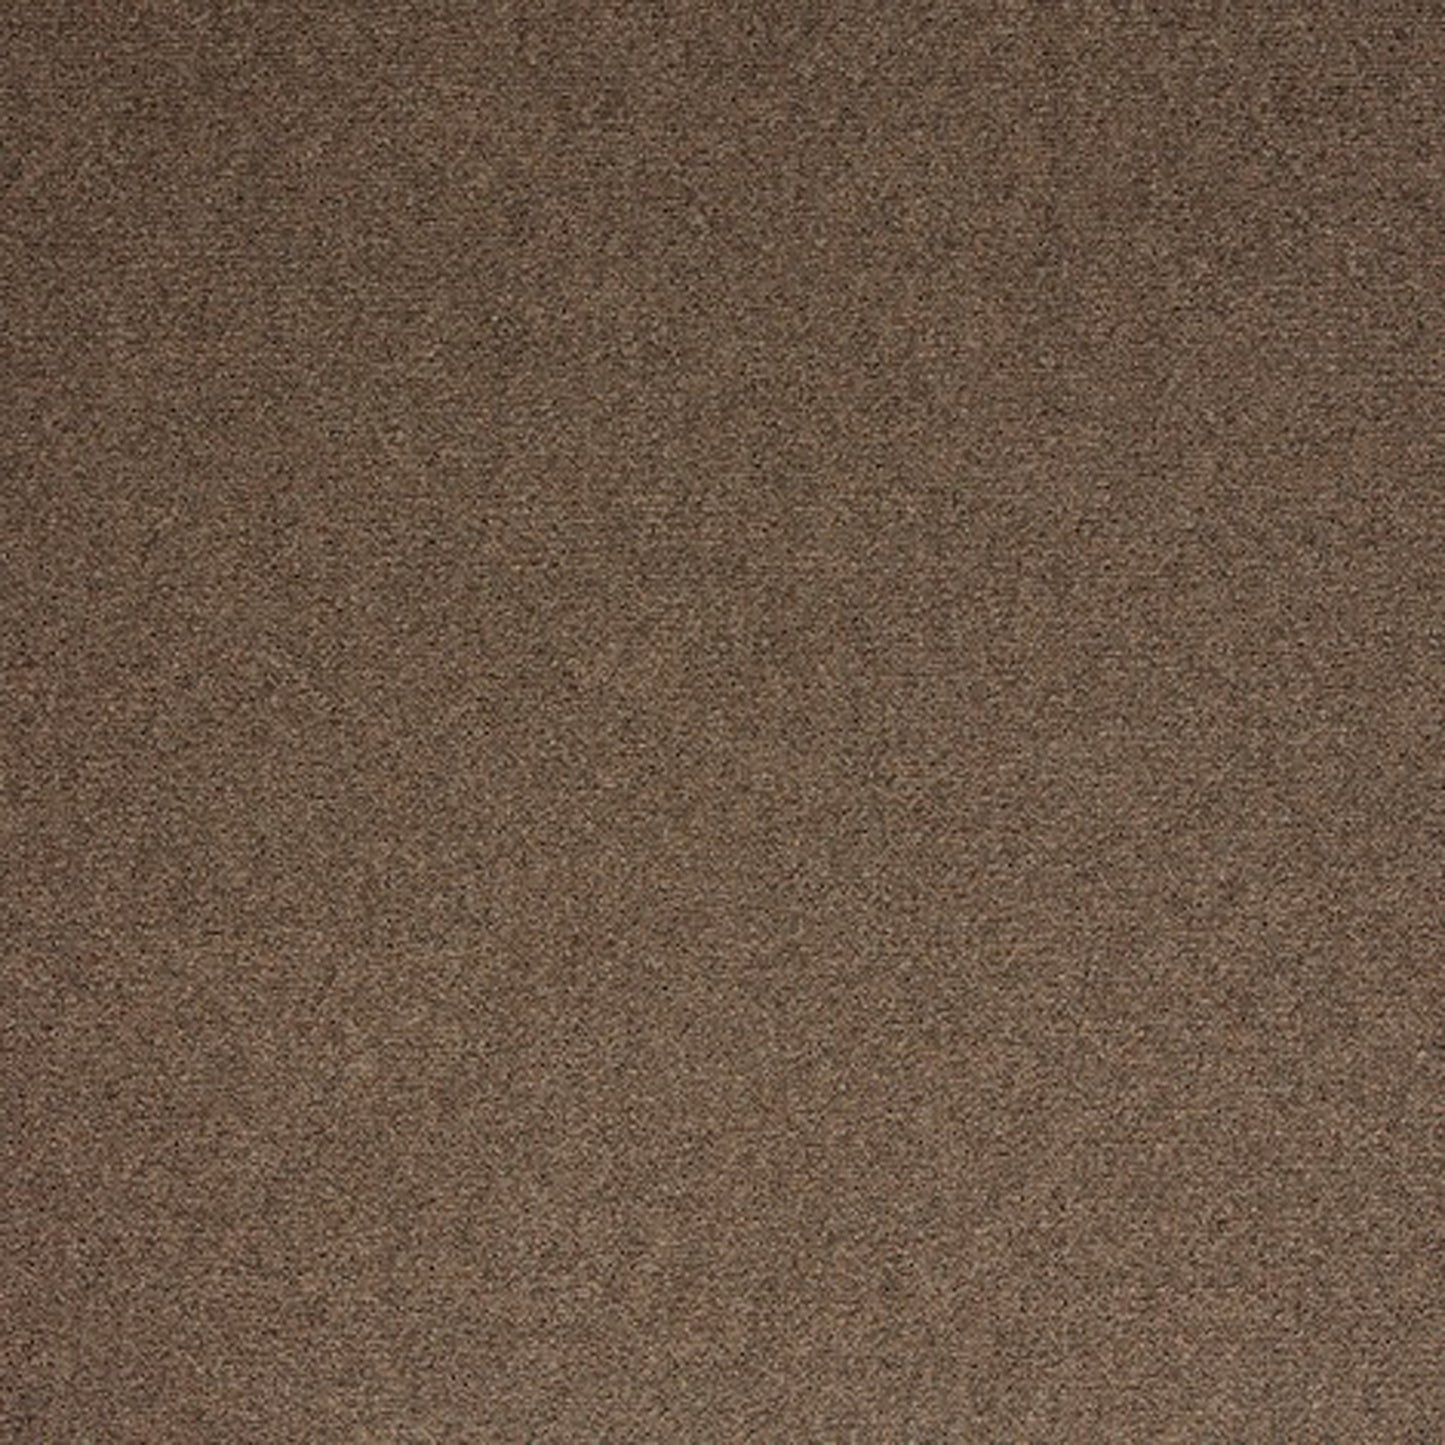 Satisfaction Polypropylene Carpet Collection Polypropylene Carpet by KLD Home